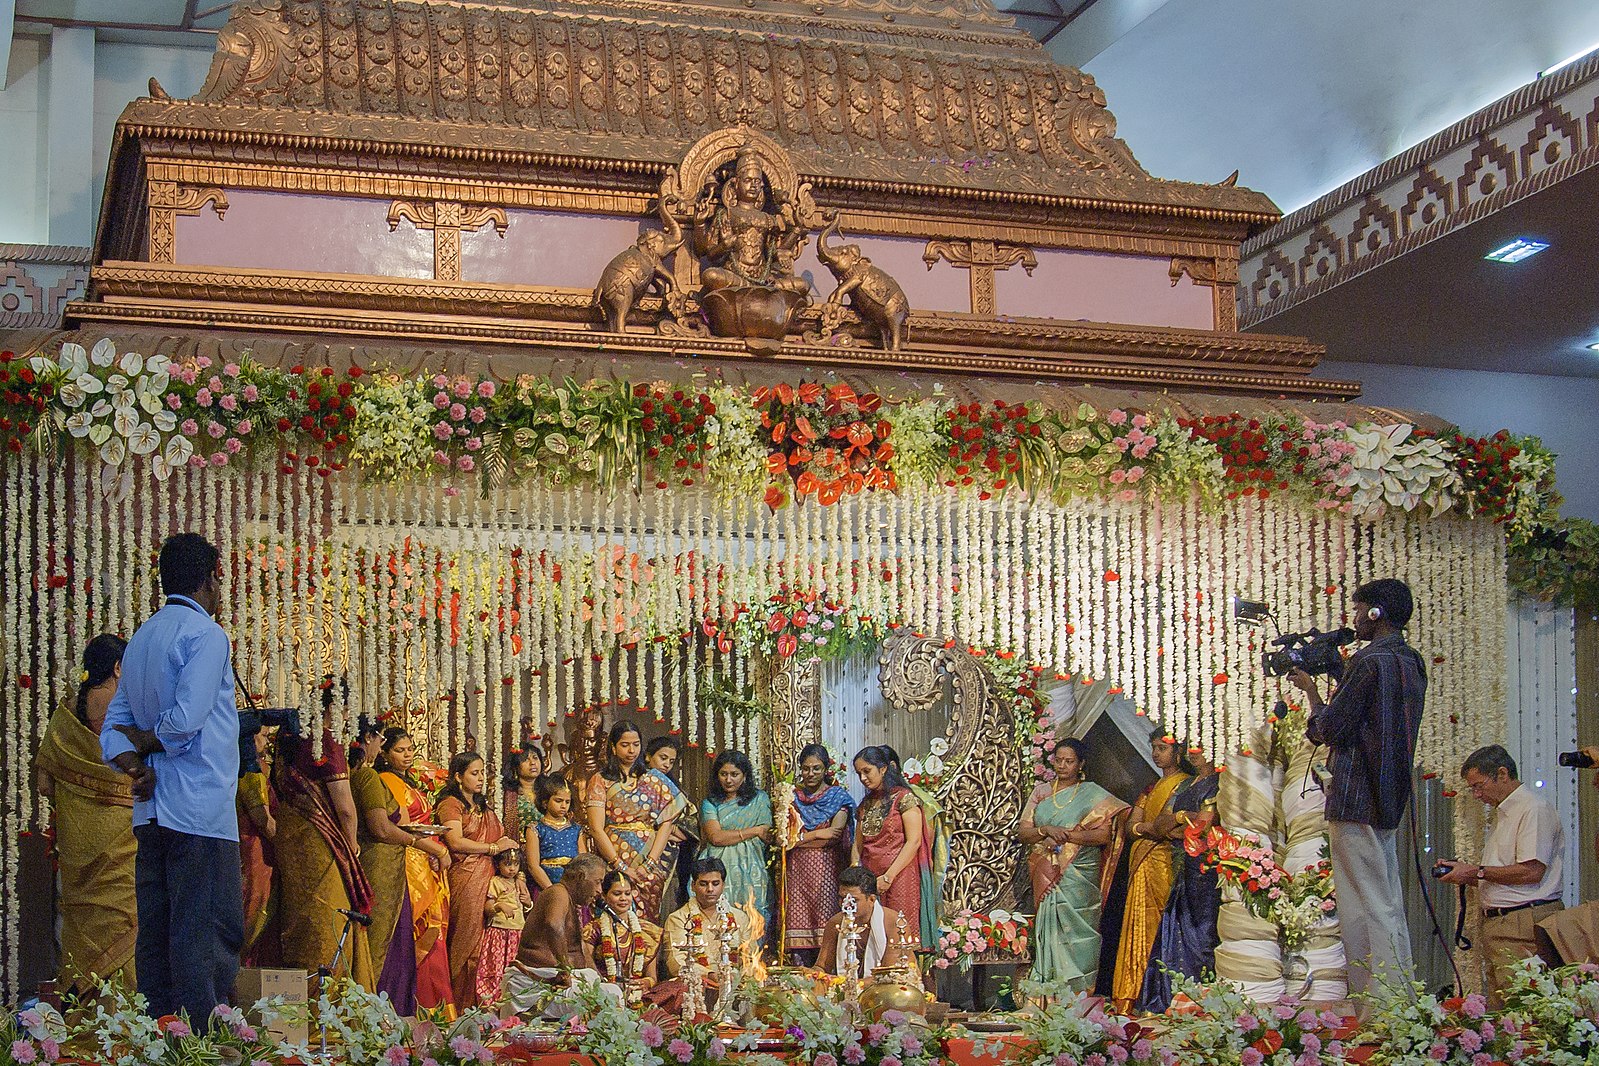 A 2010 wedding in Puducherry, Tamil Nadu, India. “A fancy Indian wedding taking place in Puducherry, Tamil Nadu, India”  Matthew T Rader, MatthewTRader.com, 2010, License CC-BY-SA 4.0